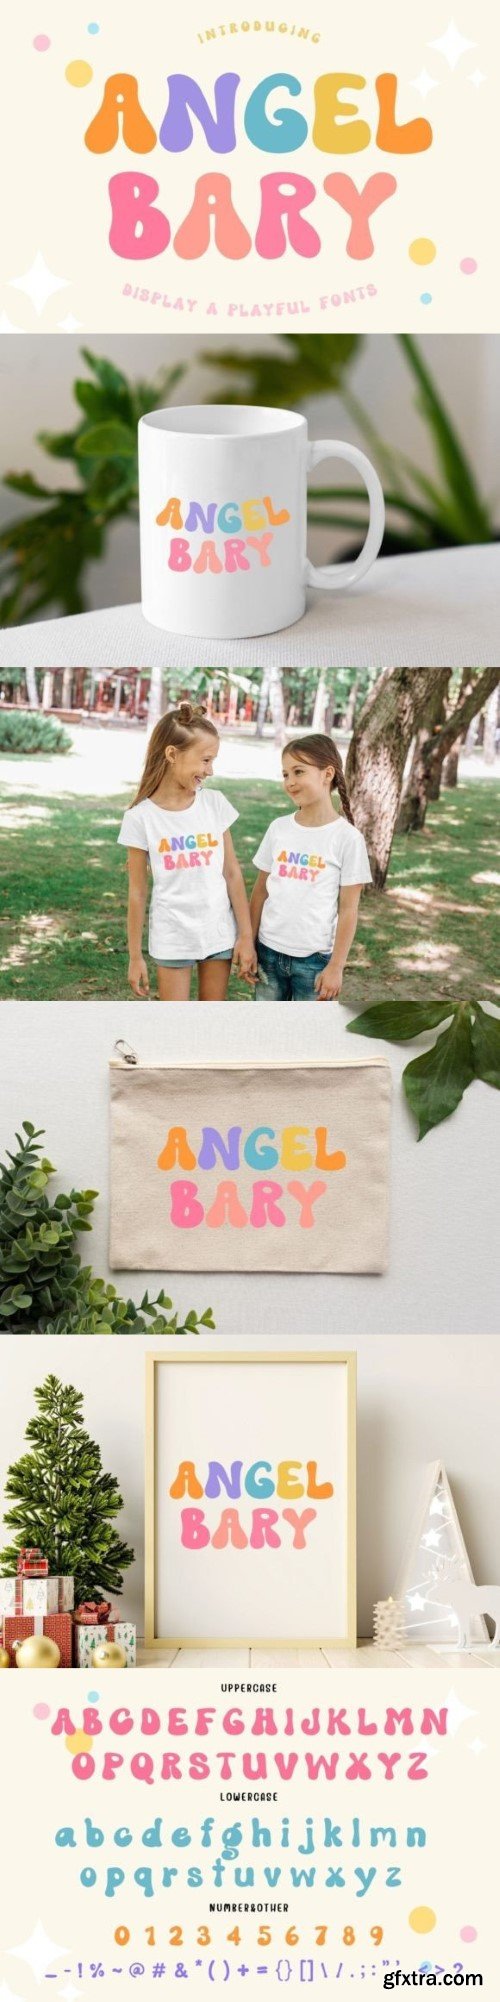 Angel Baby Font